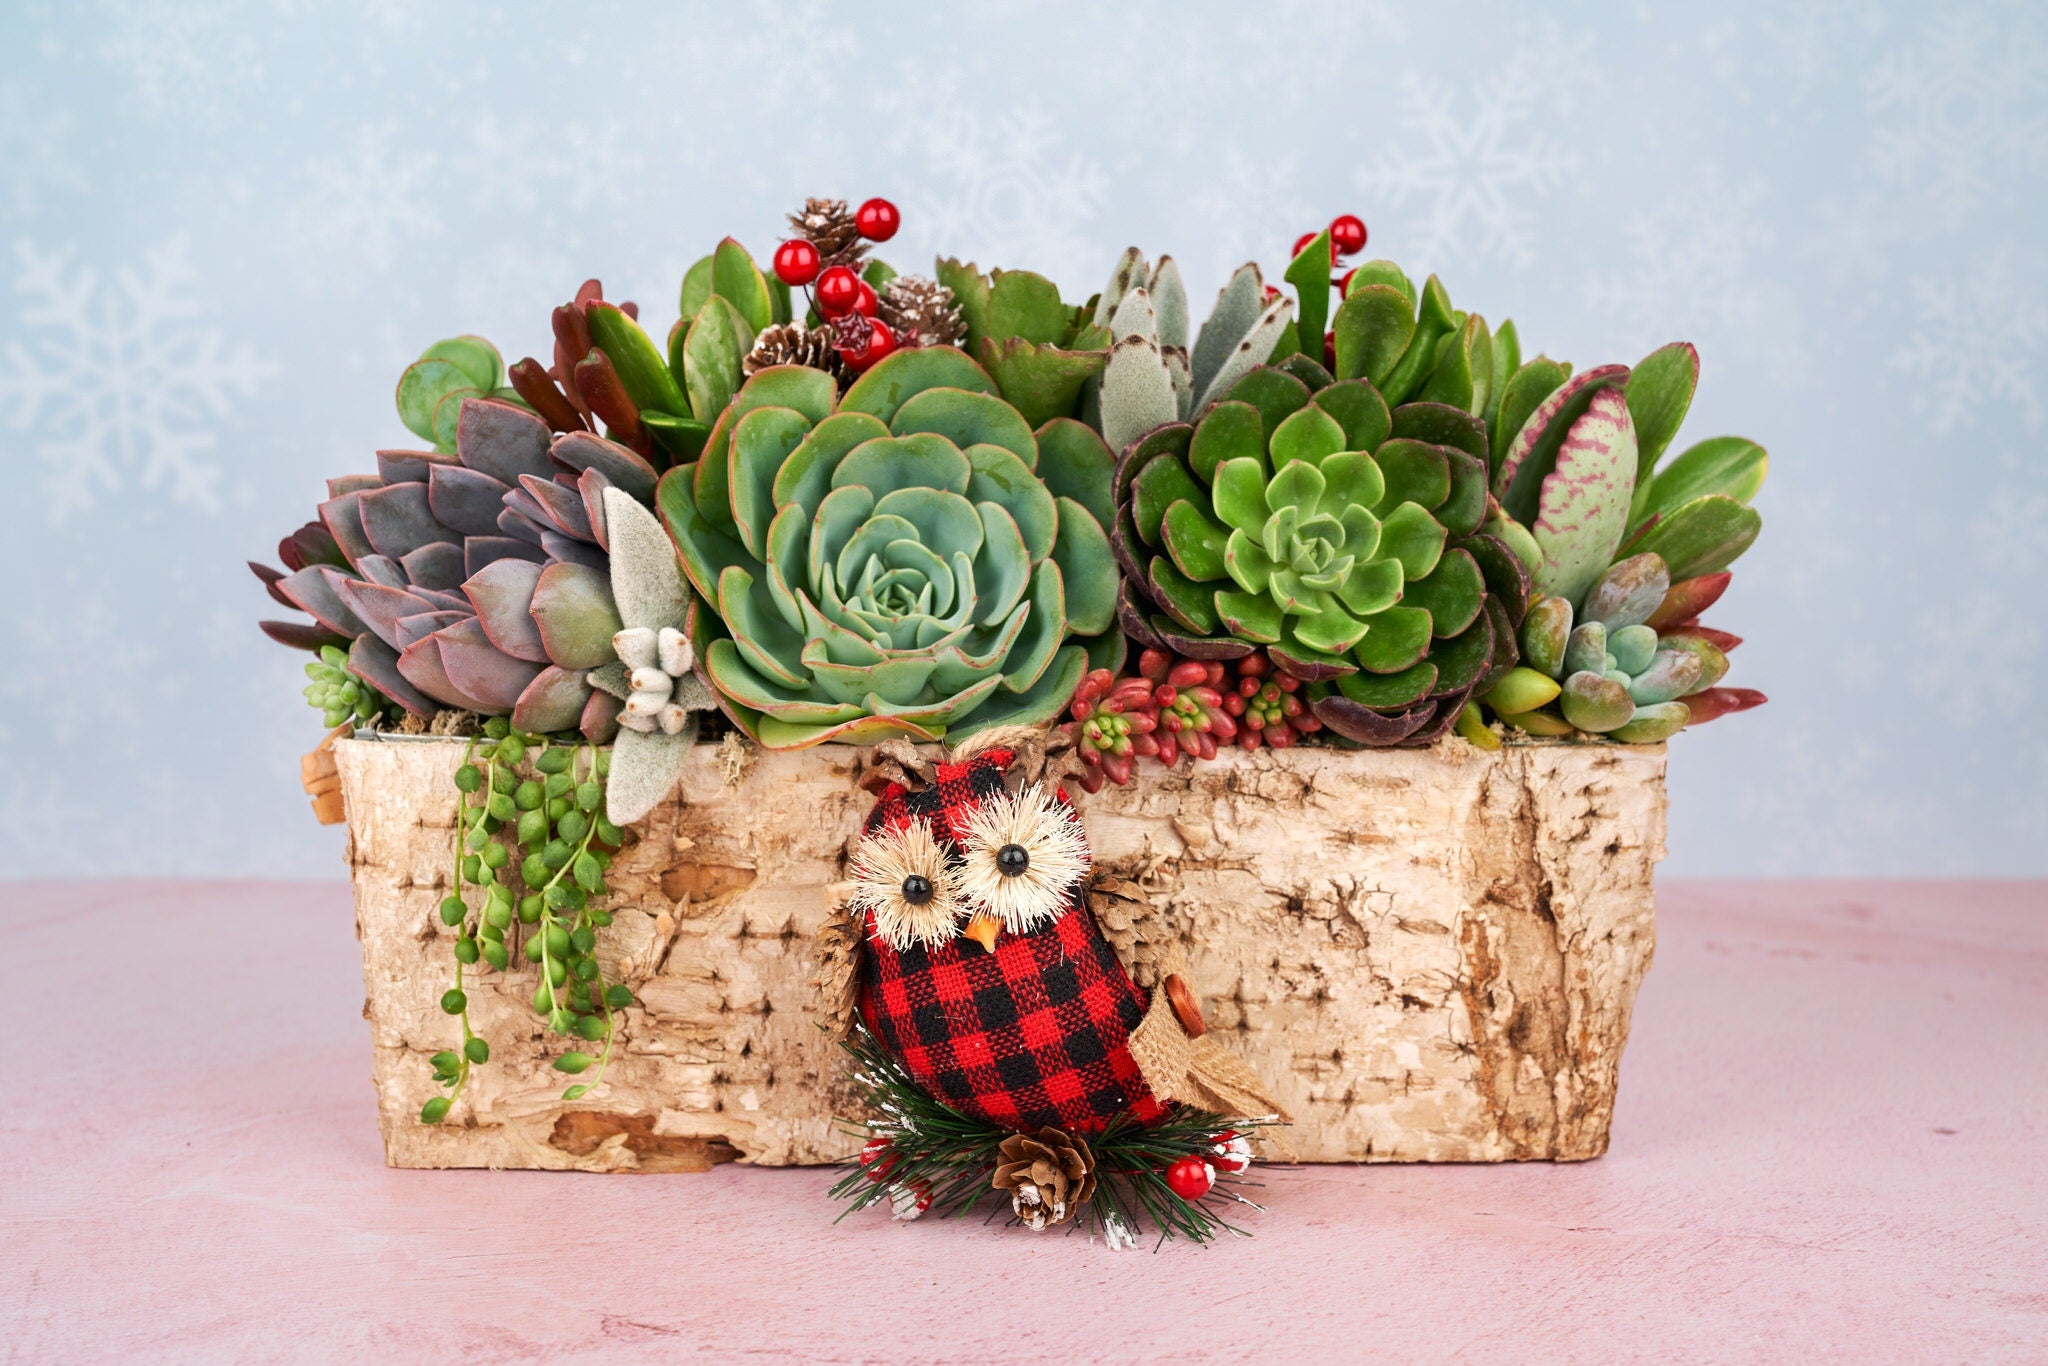 Christmas Owl Holiday Birch Succulent Arrangement Planter: Winter Holiday Centerpiece or Home Decor